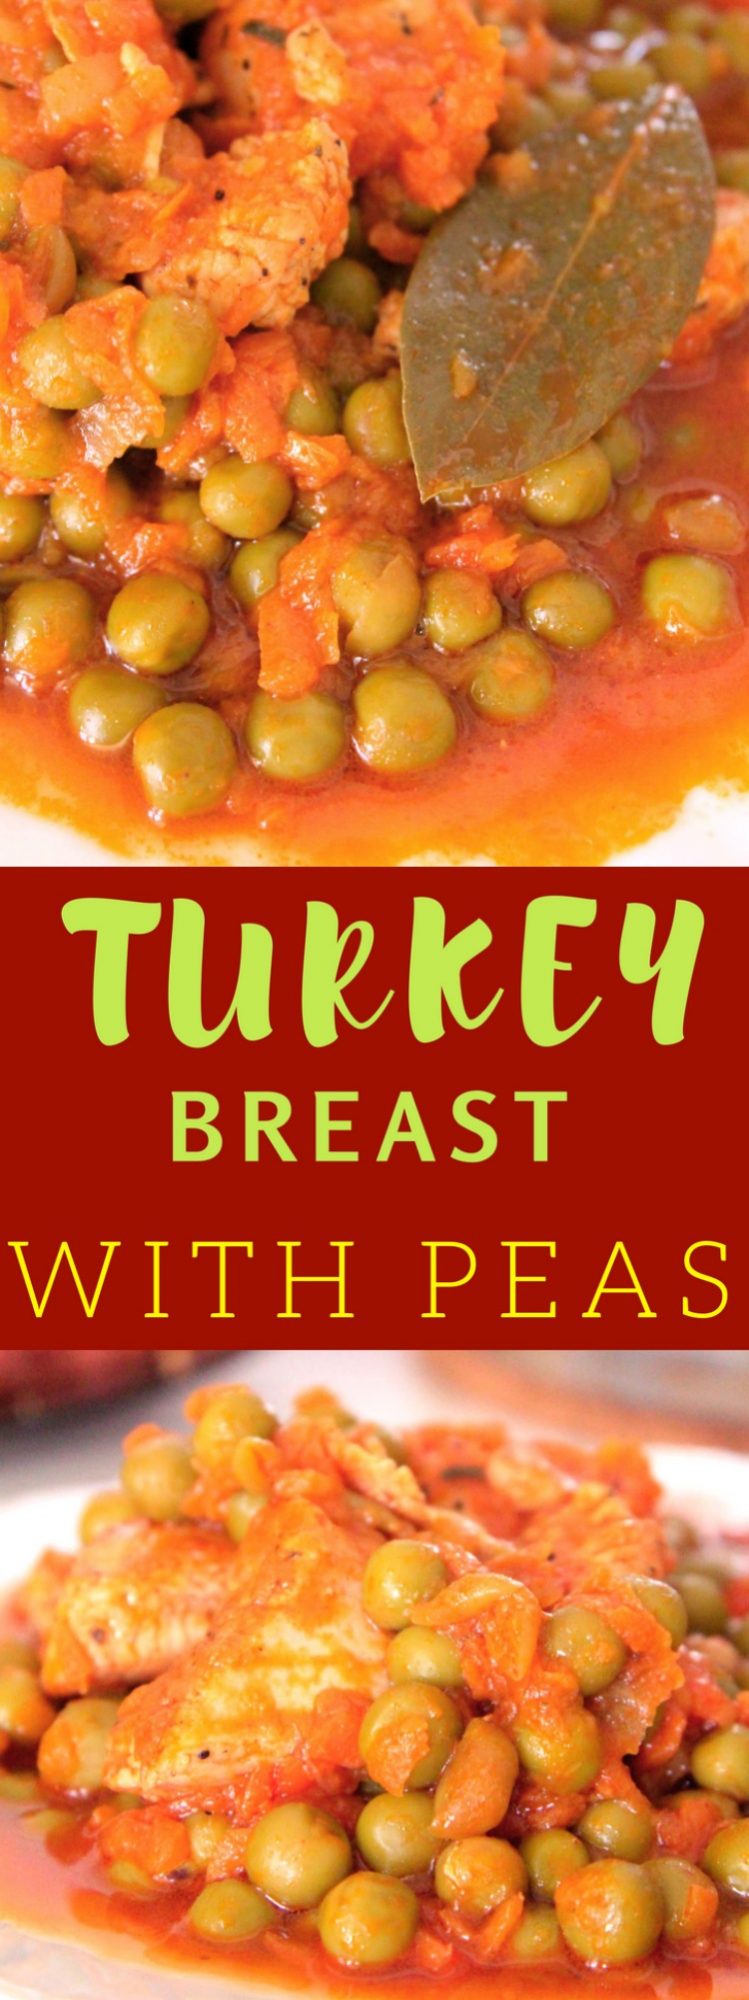 Turkey breast with peas